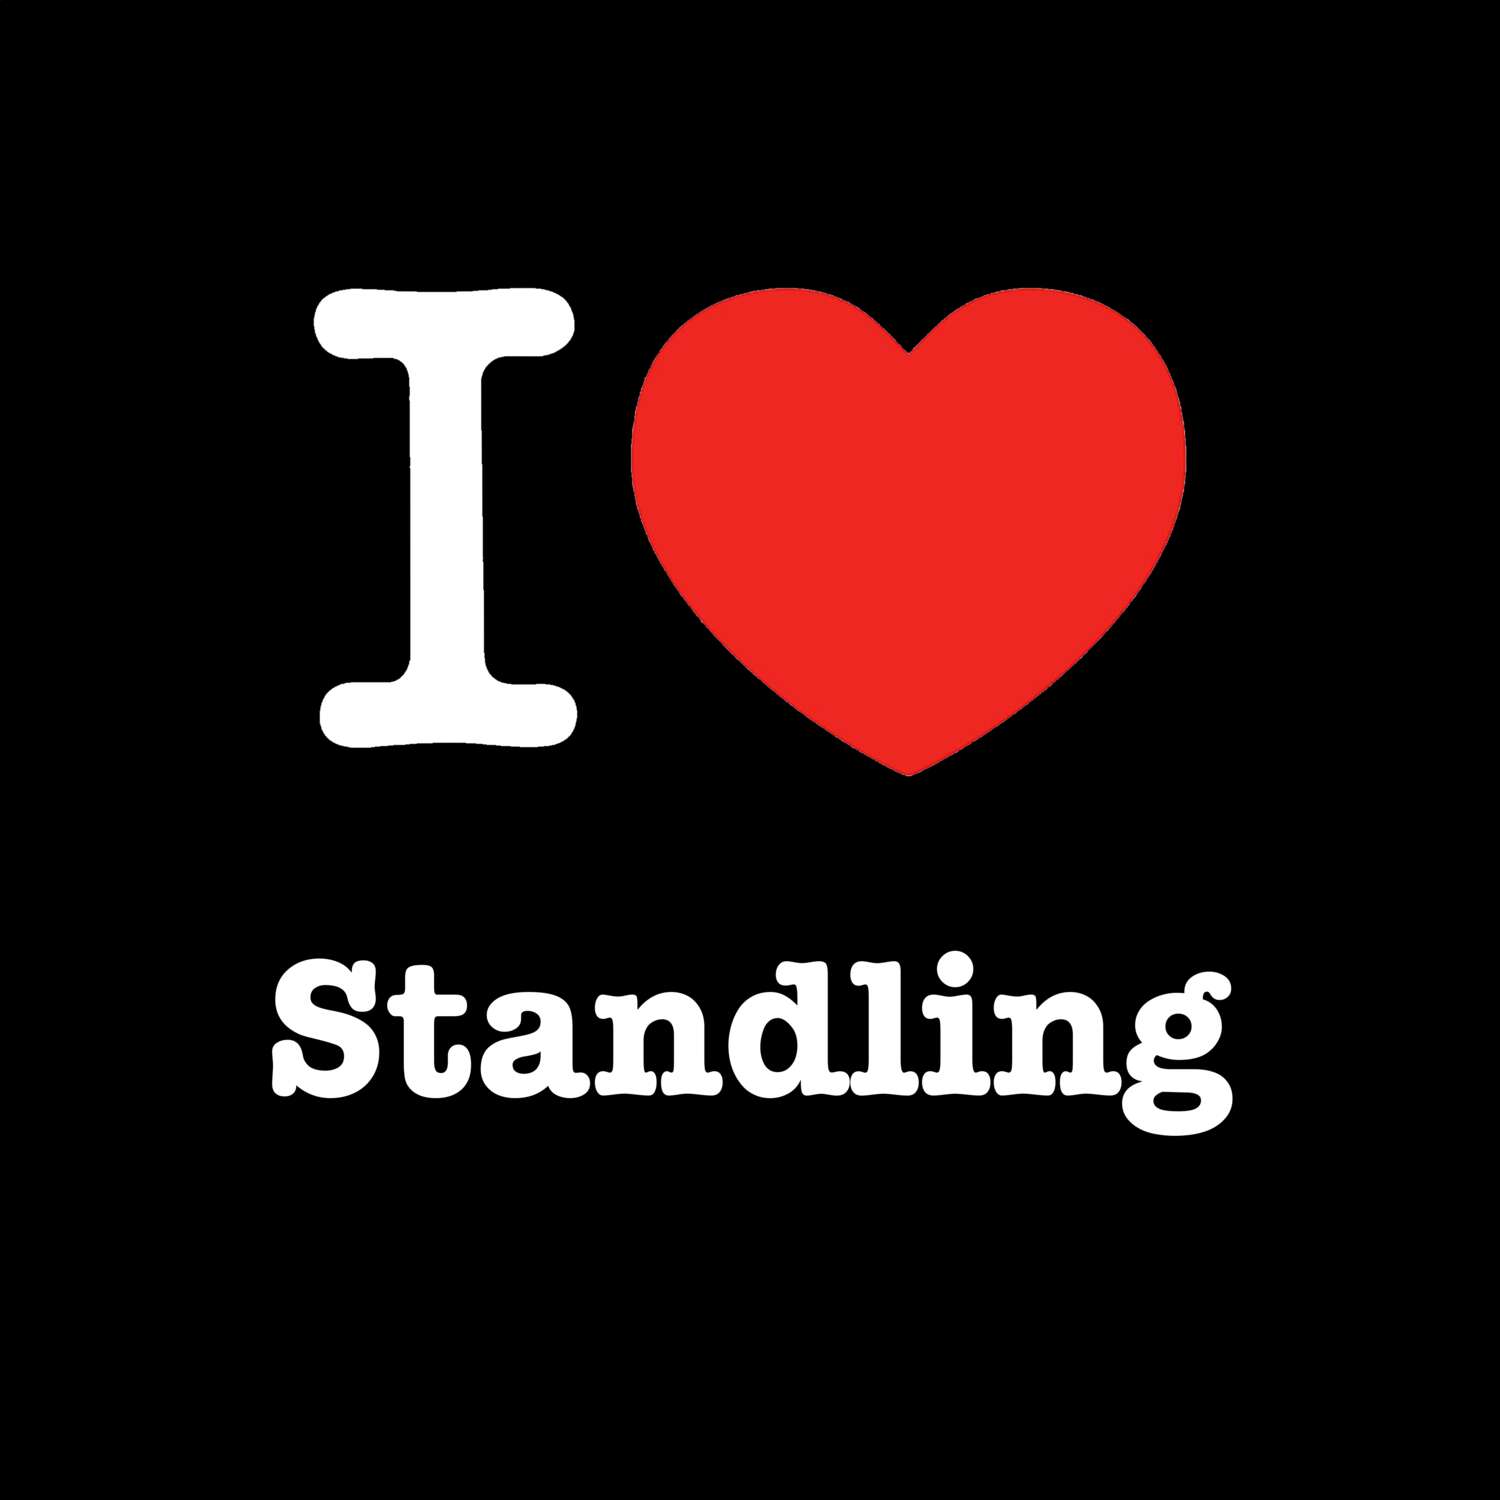 Standling T-Shirt »I love«